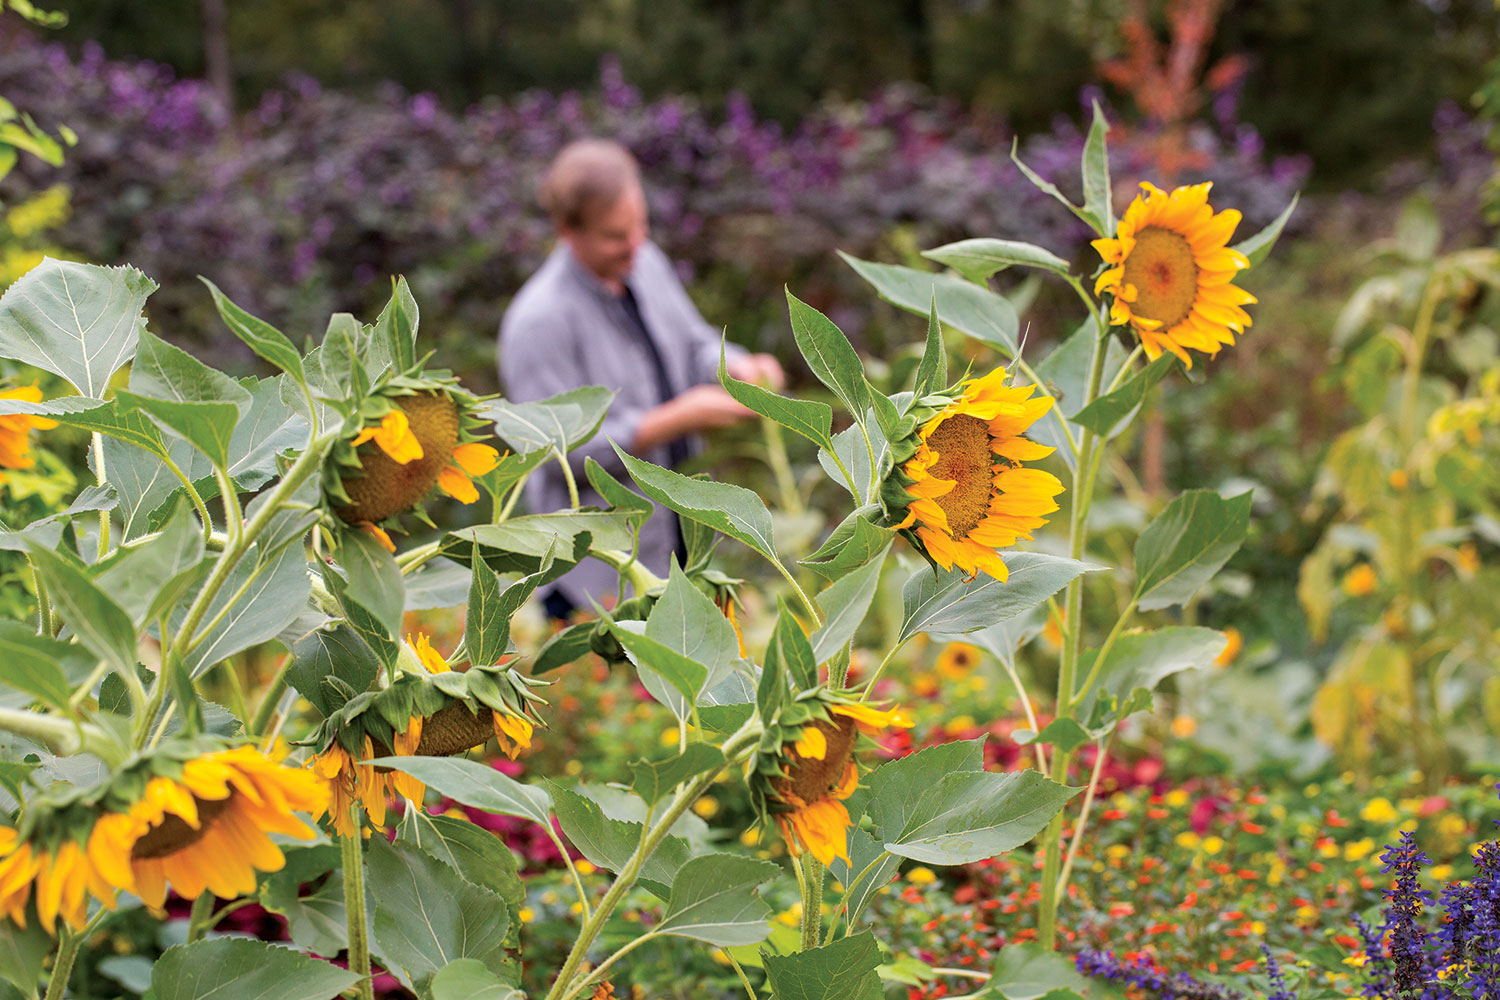 P. Allen Smith working with sunflowers in his garden